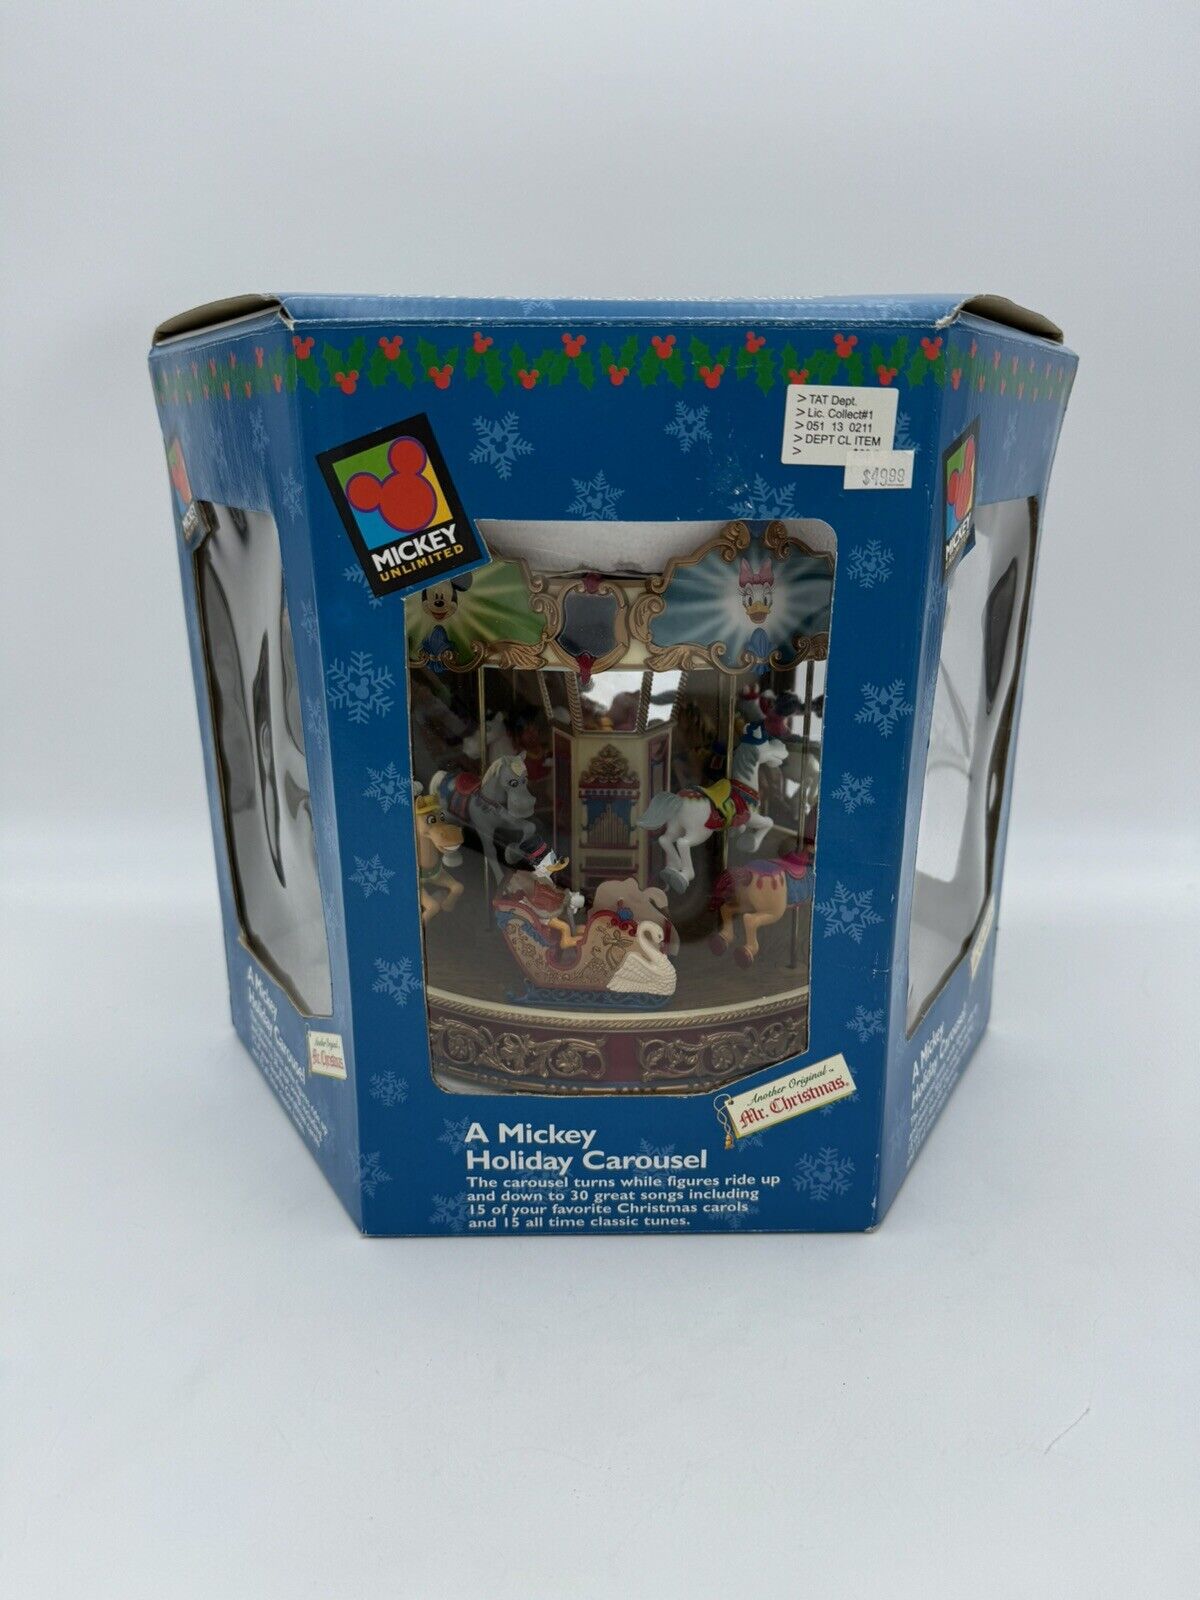 1997 Mr. Christmas Disney A Mickey Holiday Carousel 30 Songs  - Brand New